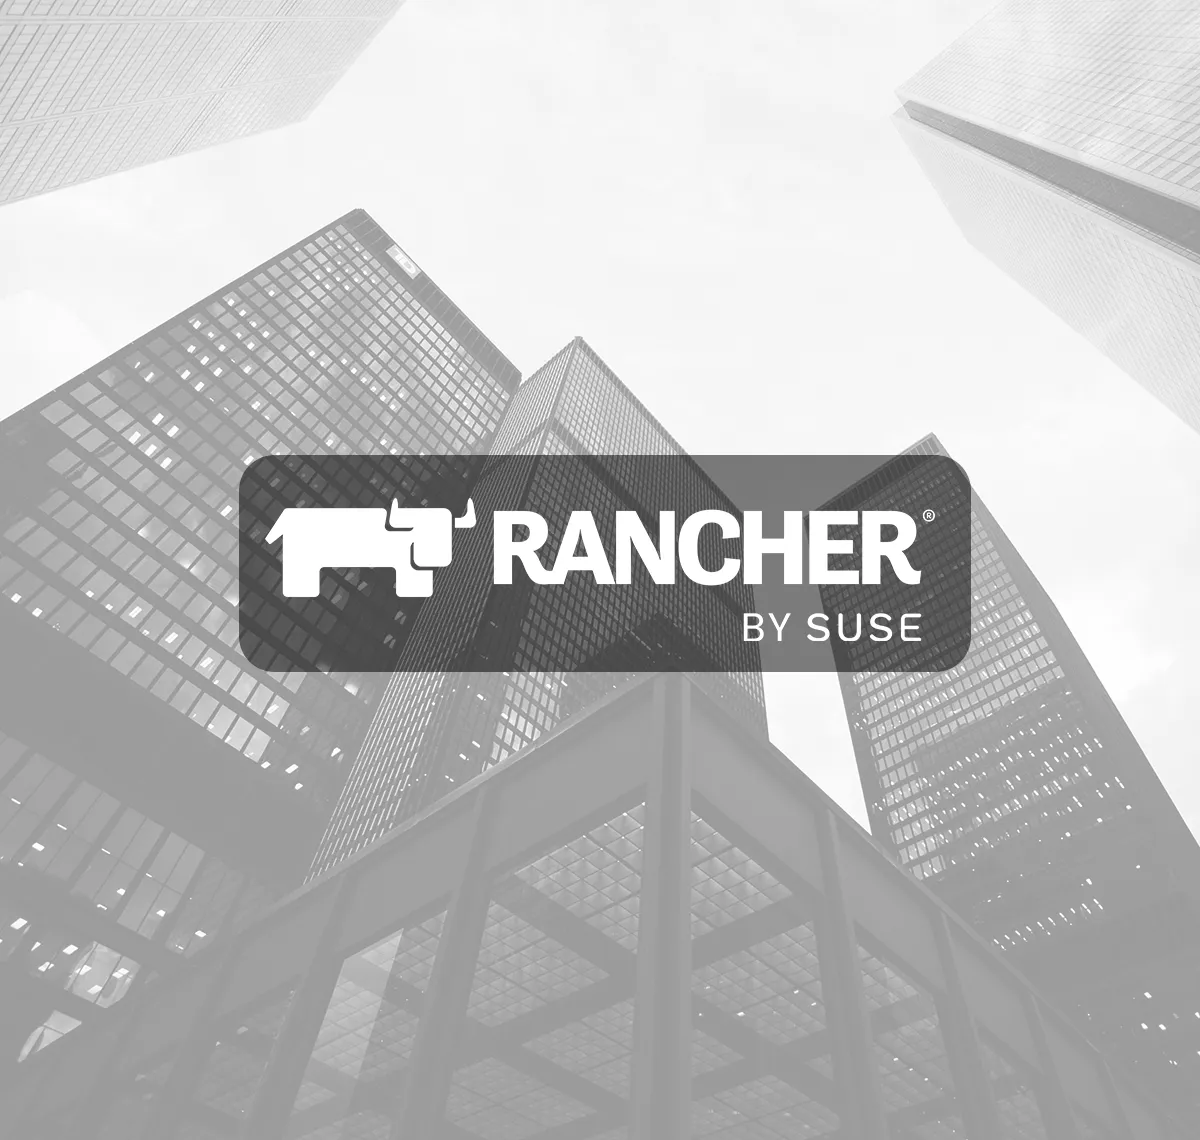 Rancher image